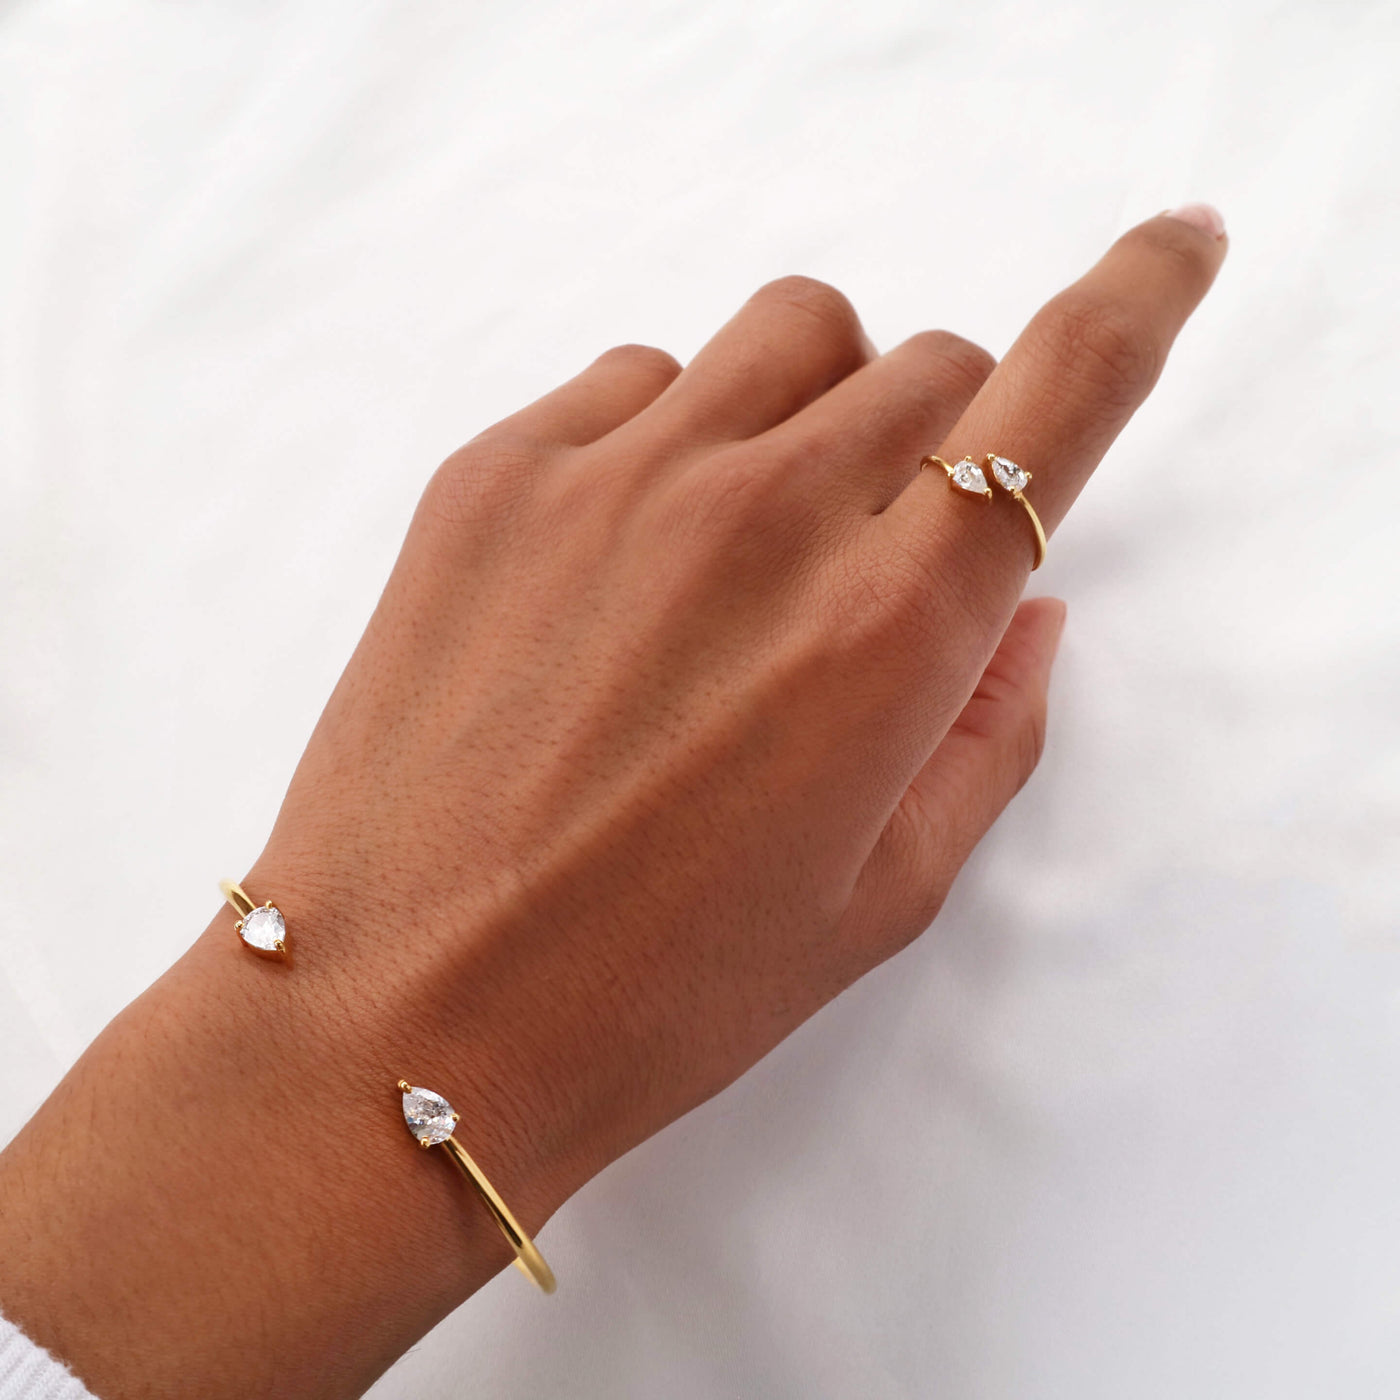 Cubic zirconia adjustable gold cuff bangle bracelet, Rani & Co. jewellery